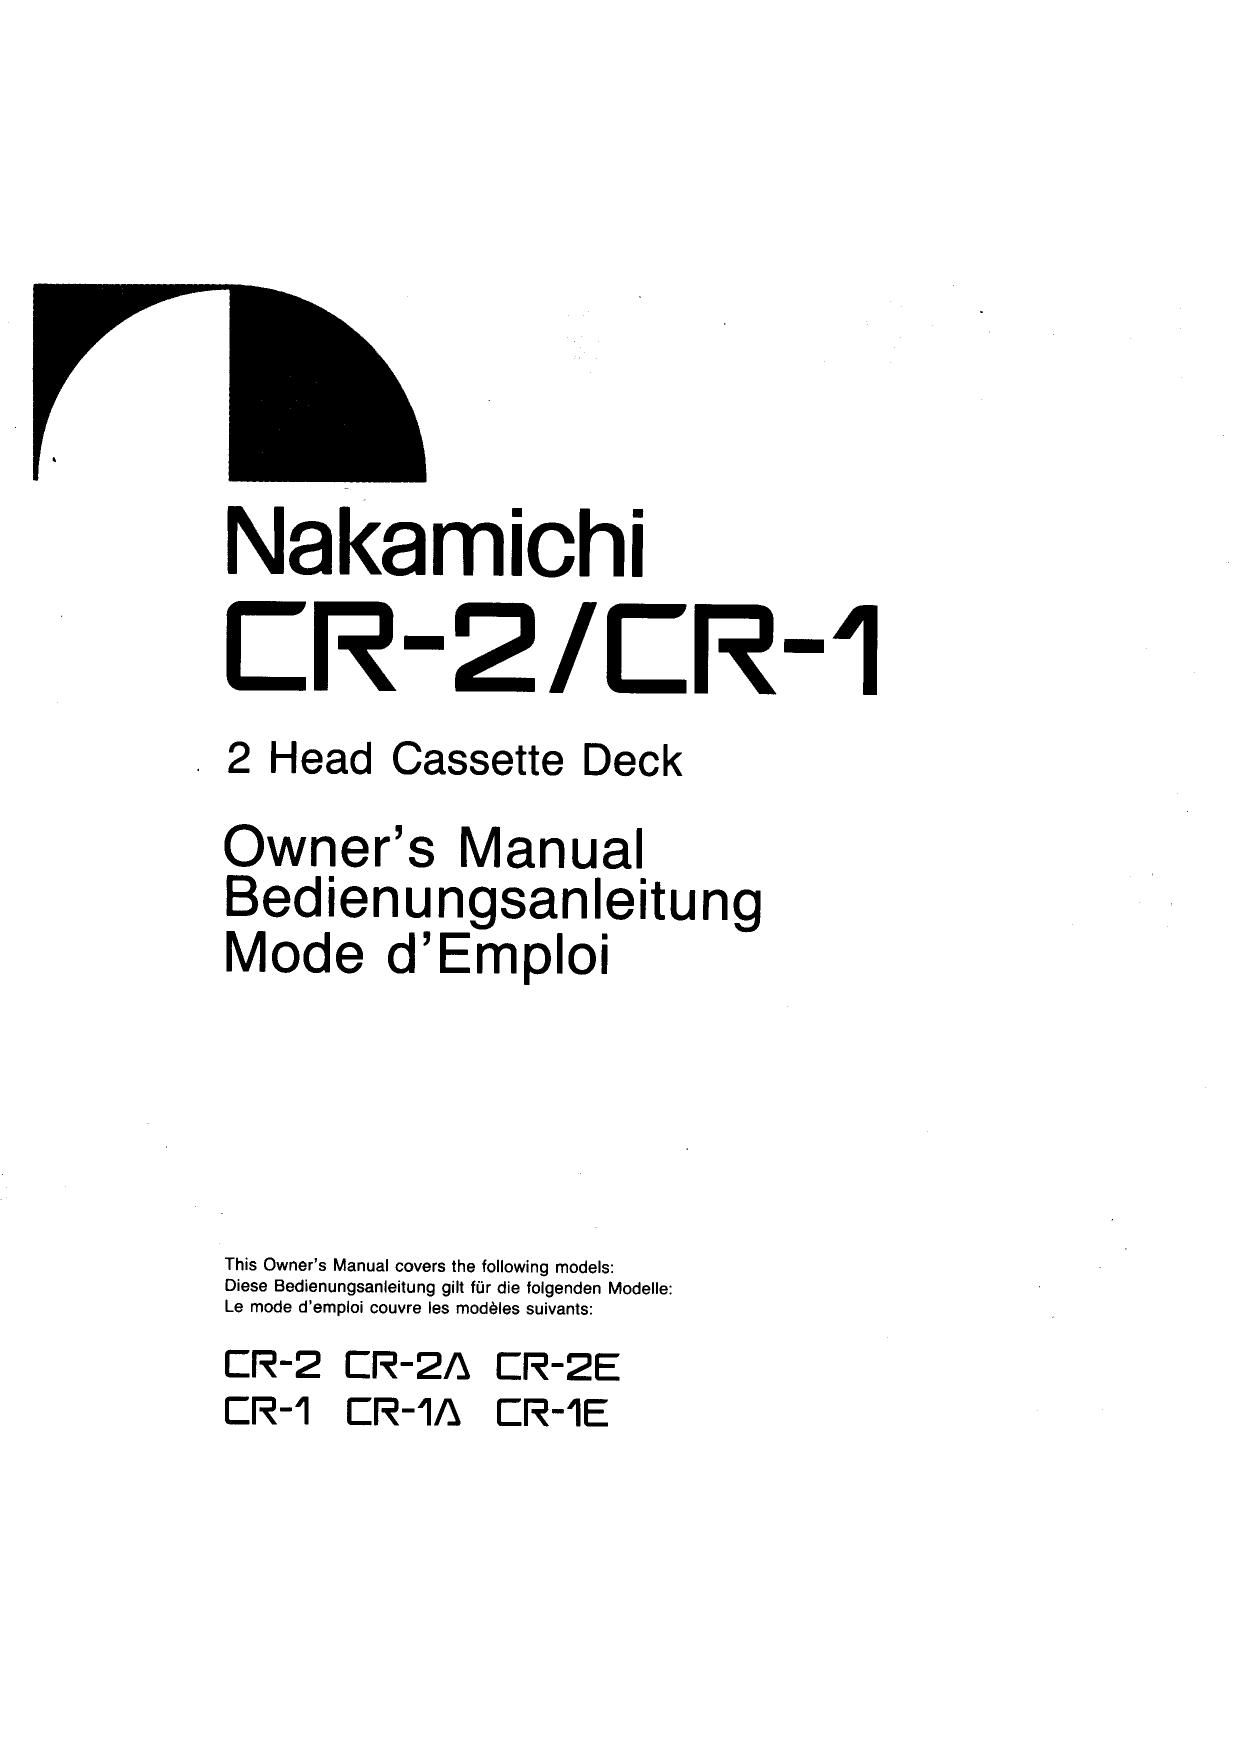 Nakamichi CR 1 Owners Manual